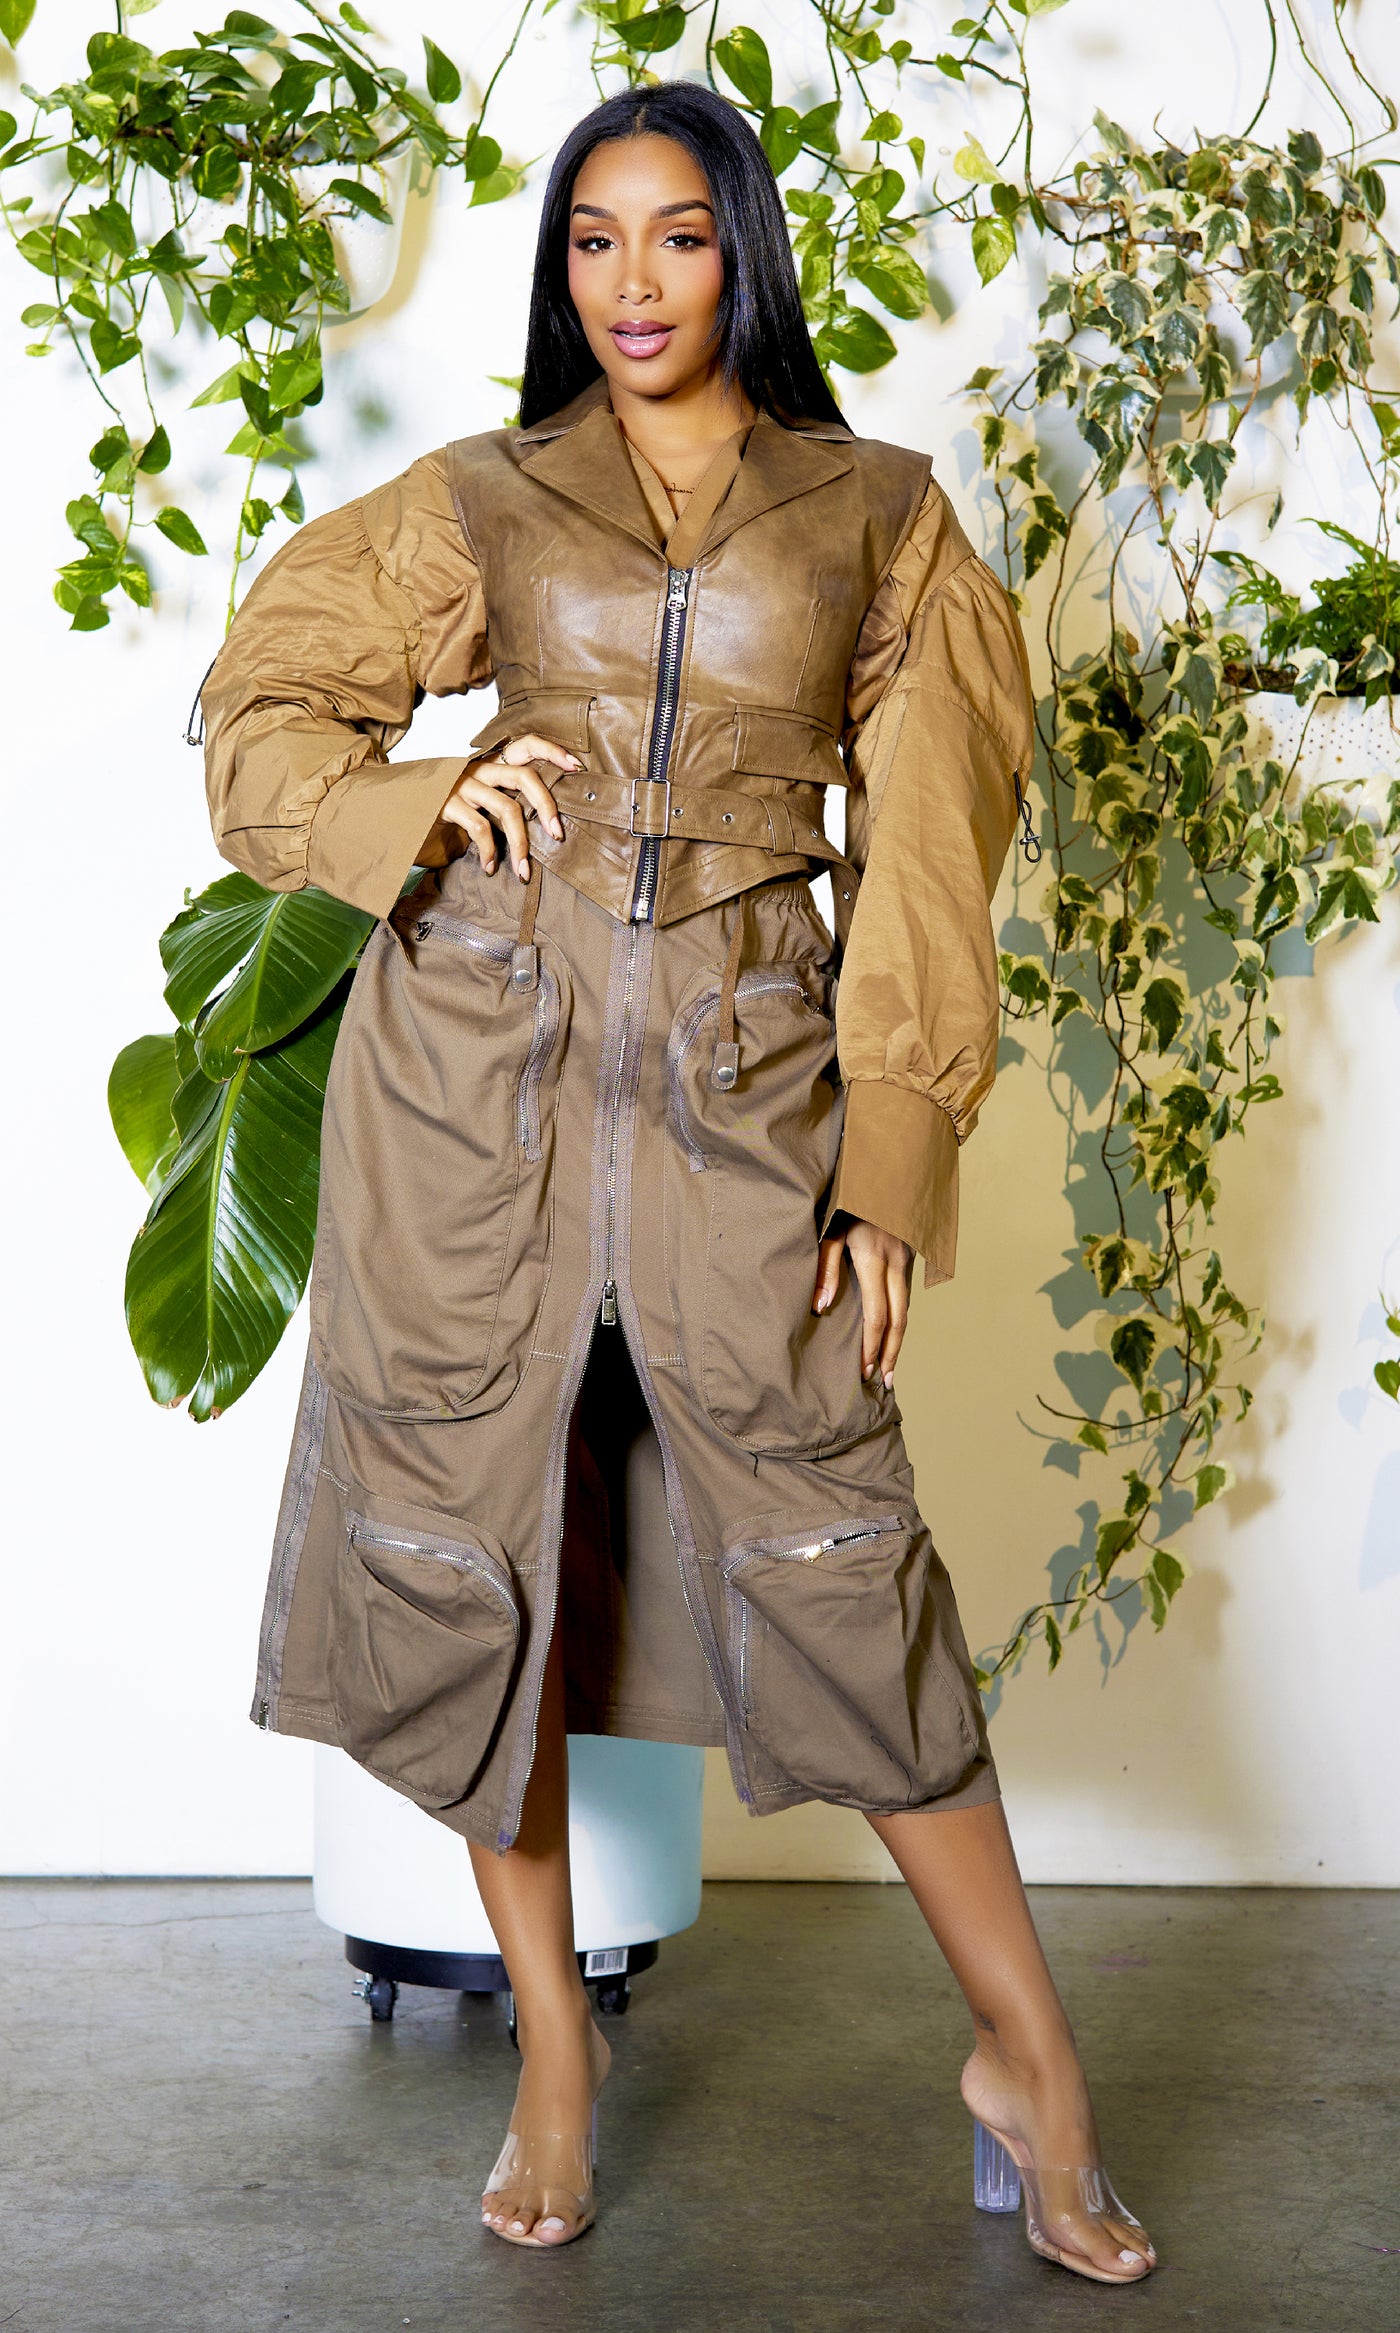 Fashion Killa | Long Sleeve Leather Vest Top - Khaki - Cutely Covered